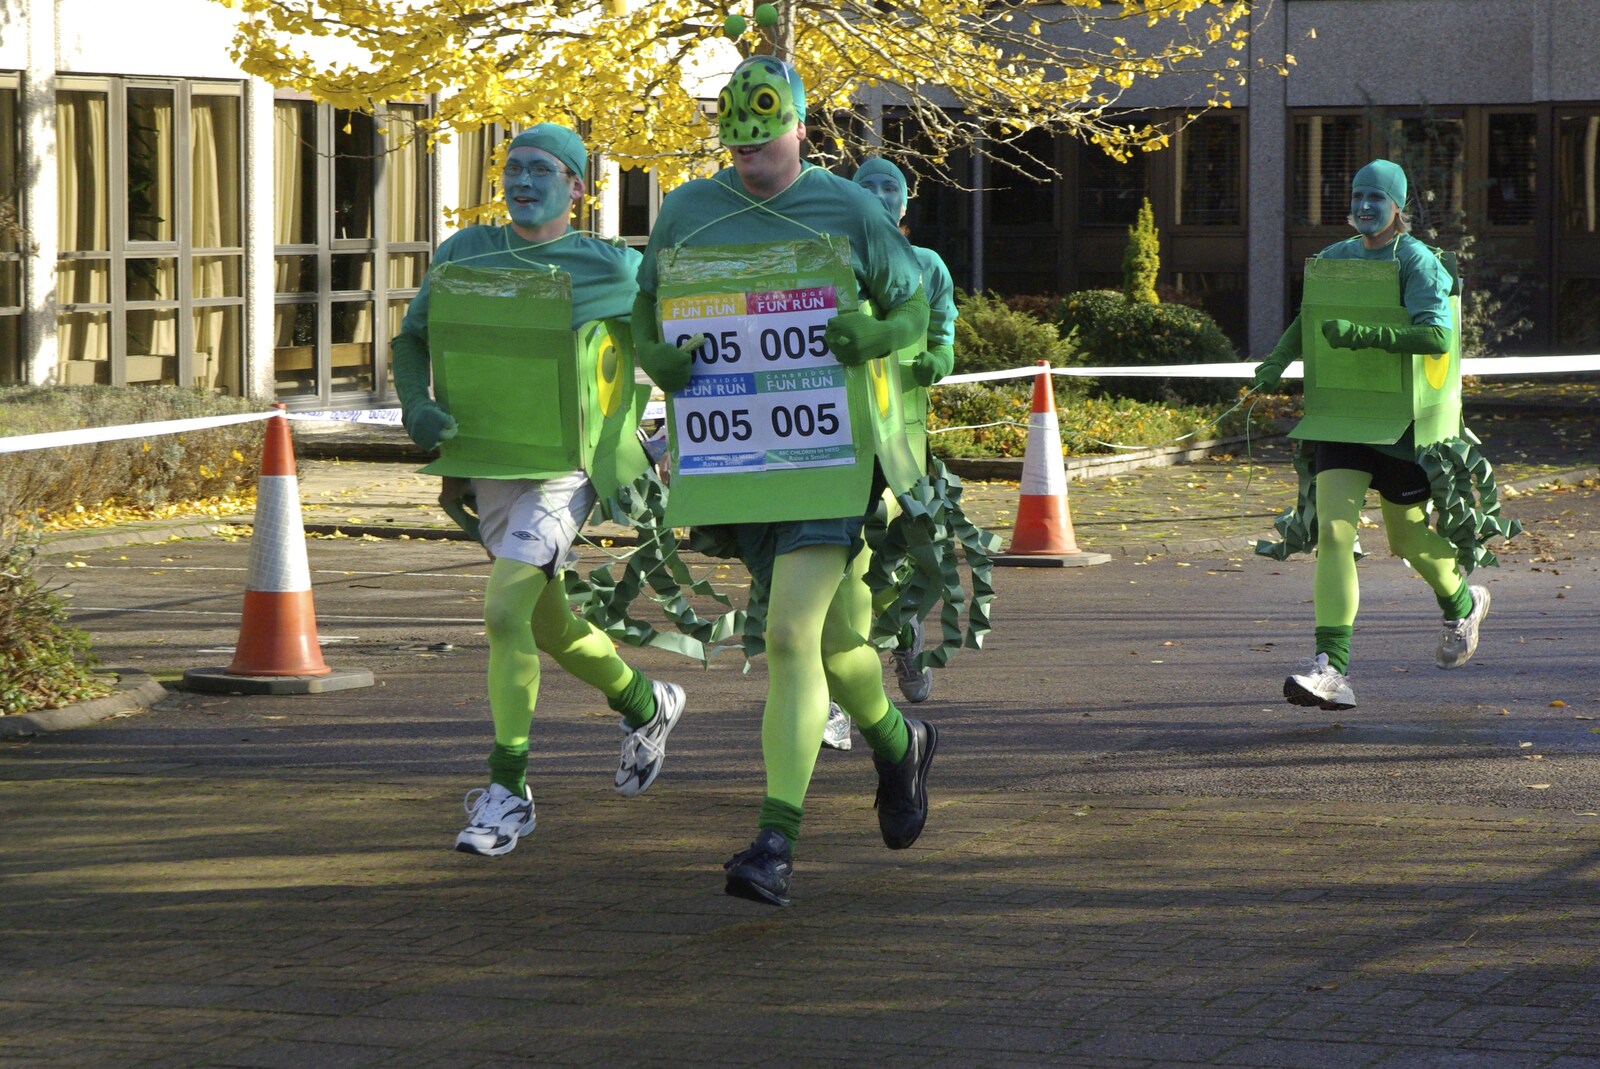 The Cambridge Fun Run, Milton Road, Cambridge - 14th November 2008: The Green team romps in